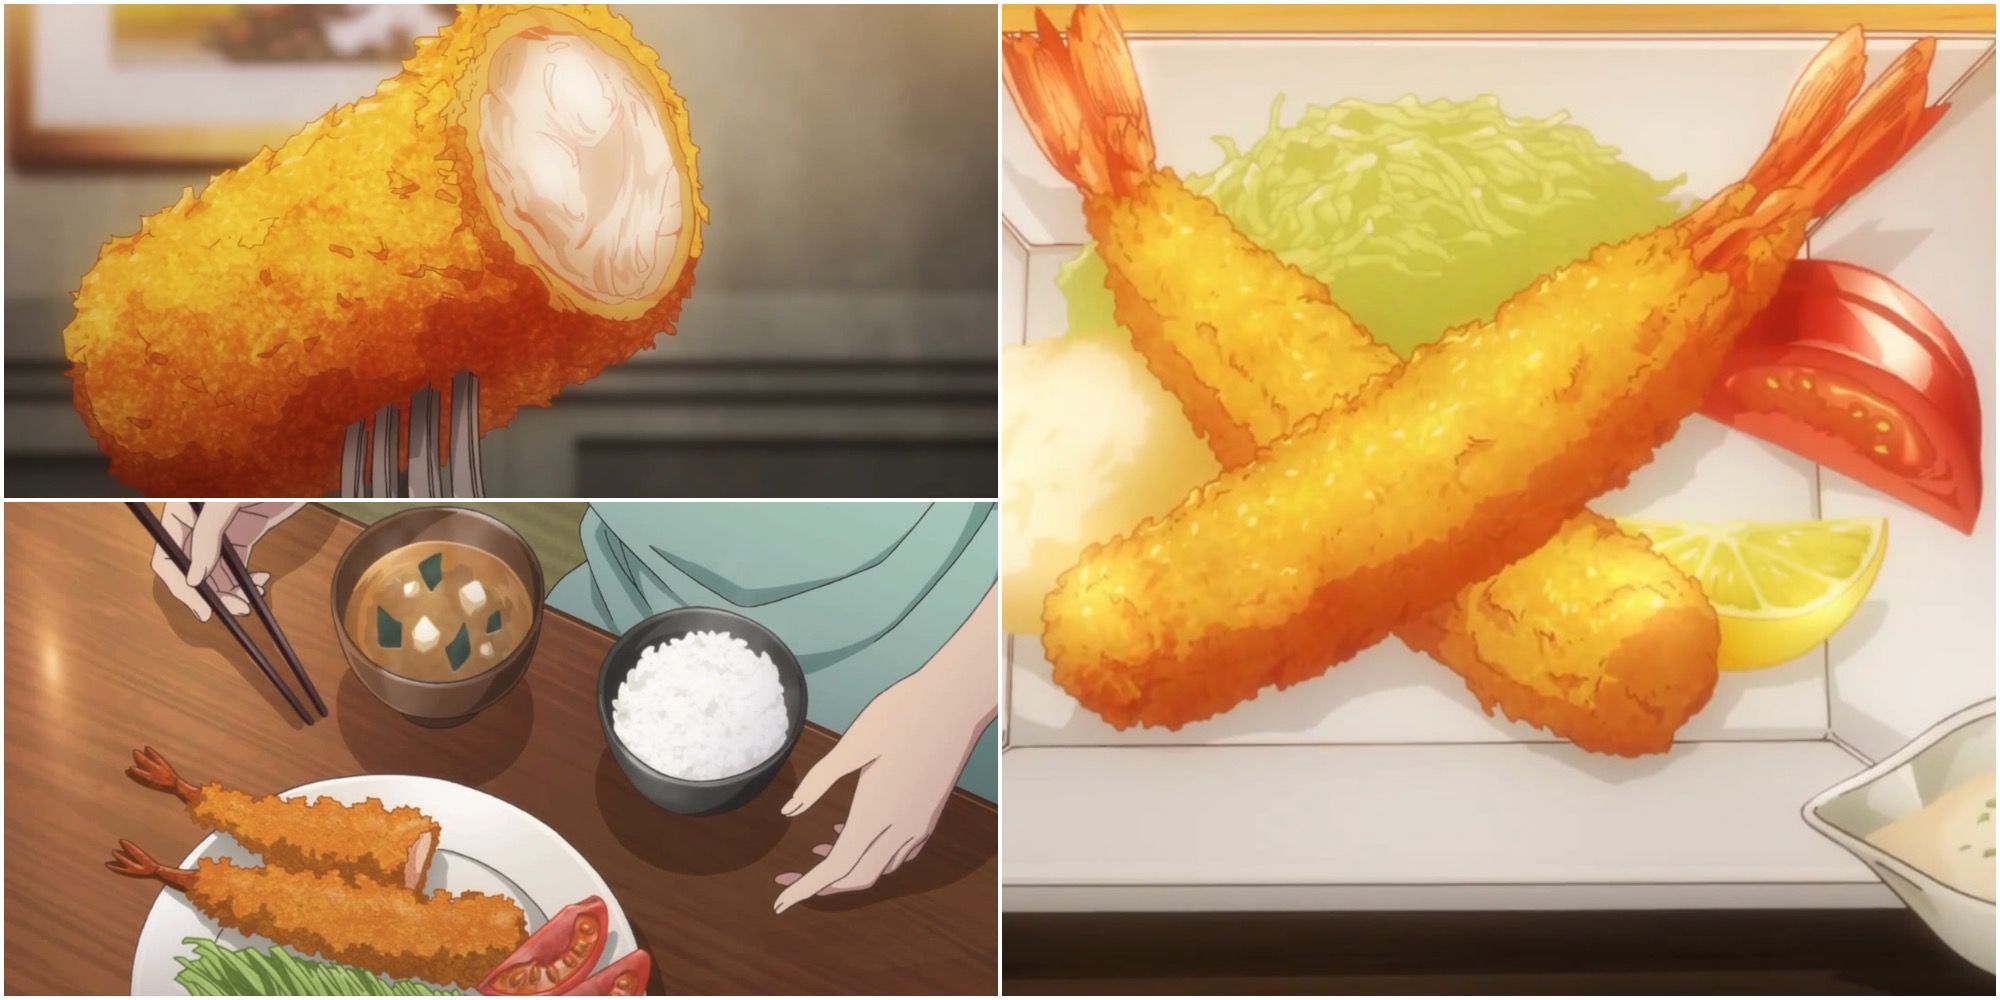 Anime picture sergestid shrimp in tungkang 2510x3227 520089 en